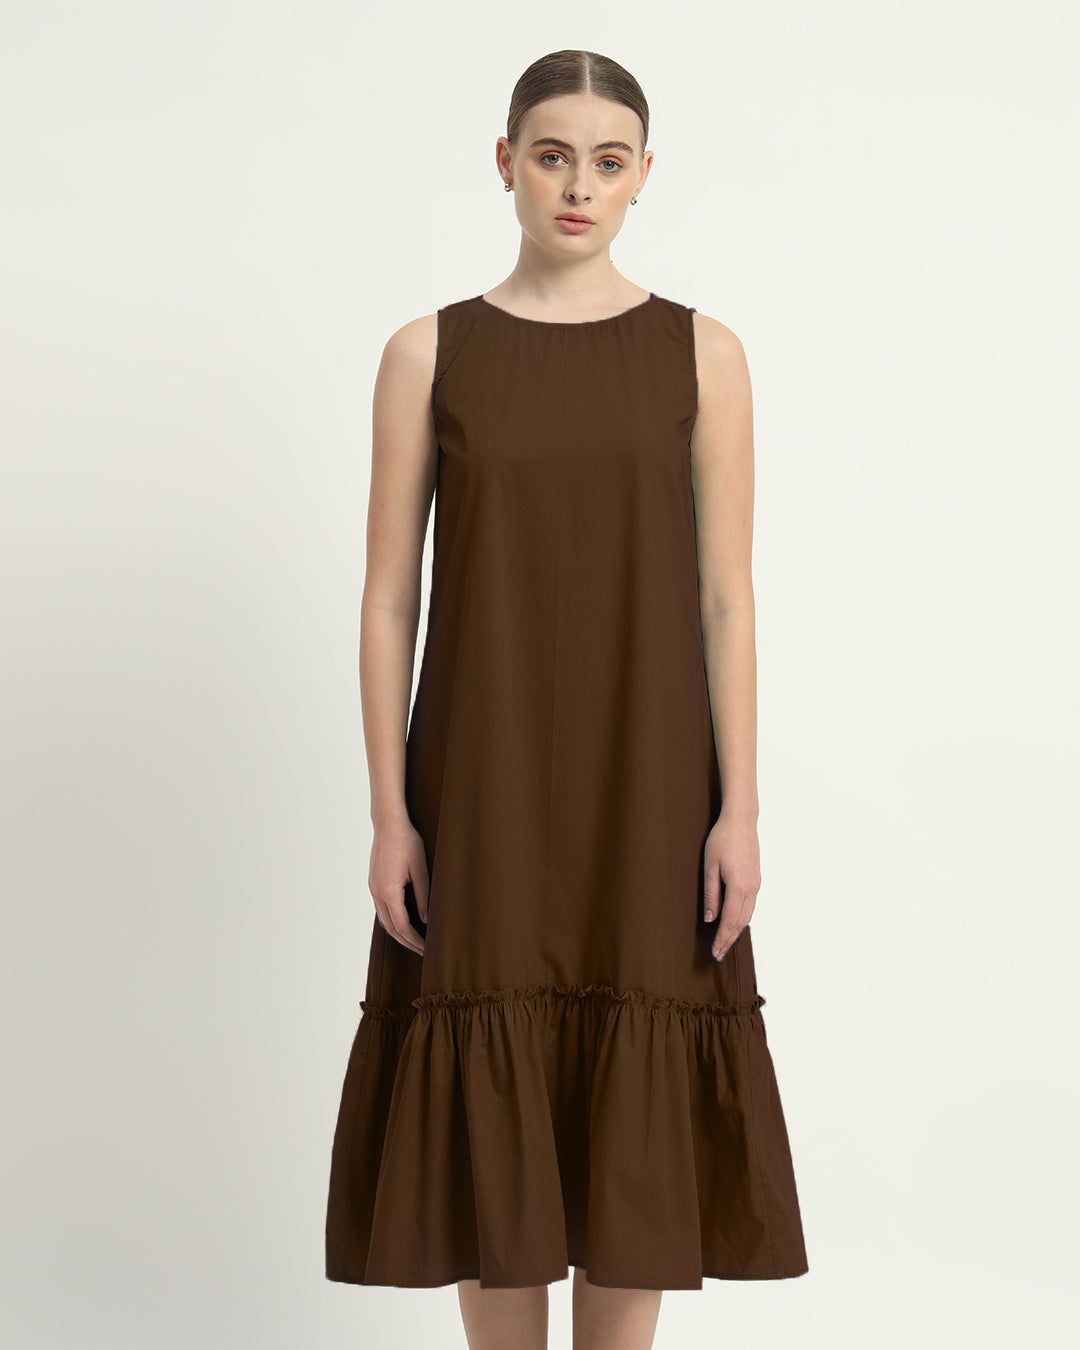 The Nutshell Millis Cotton Dress